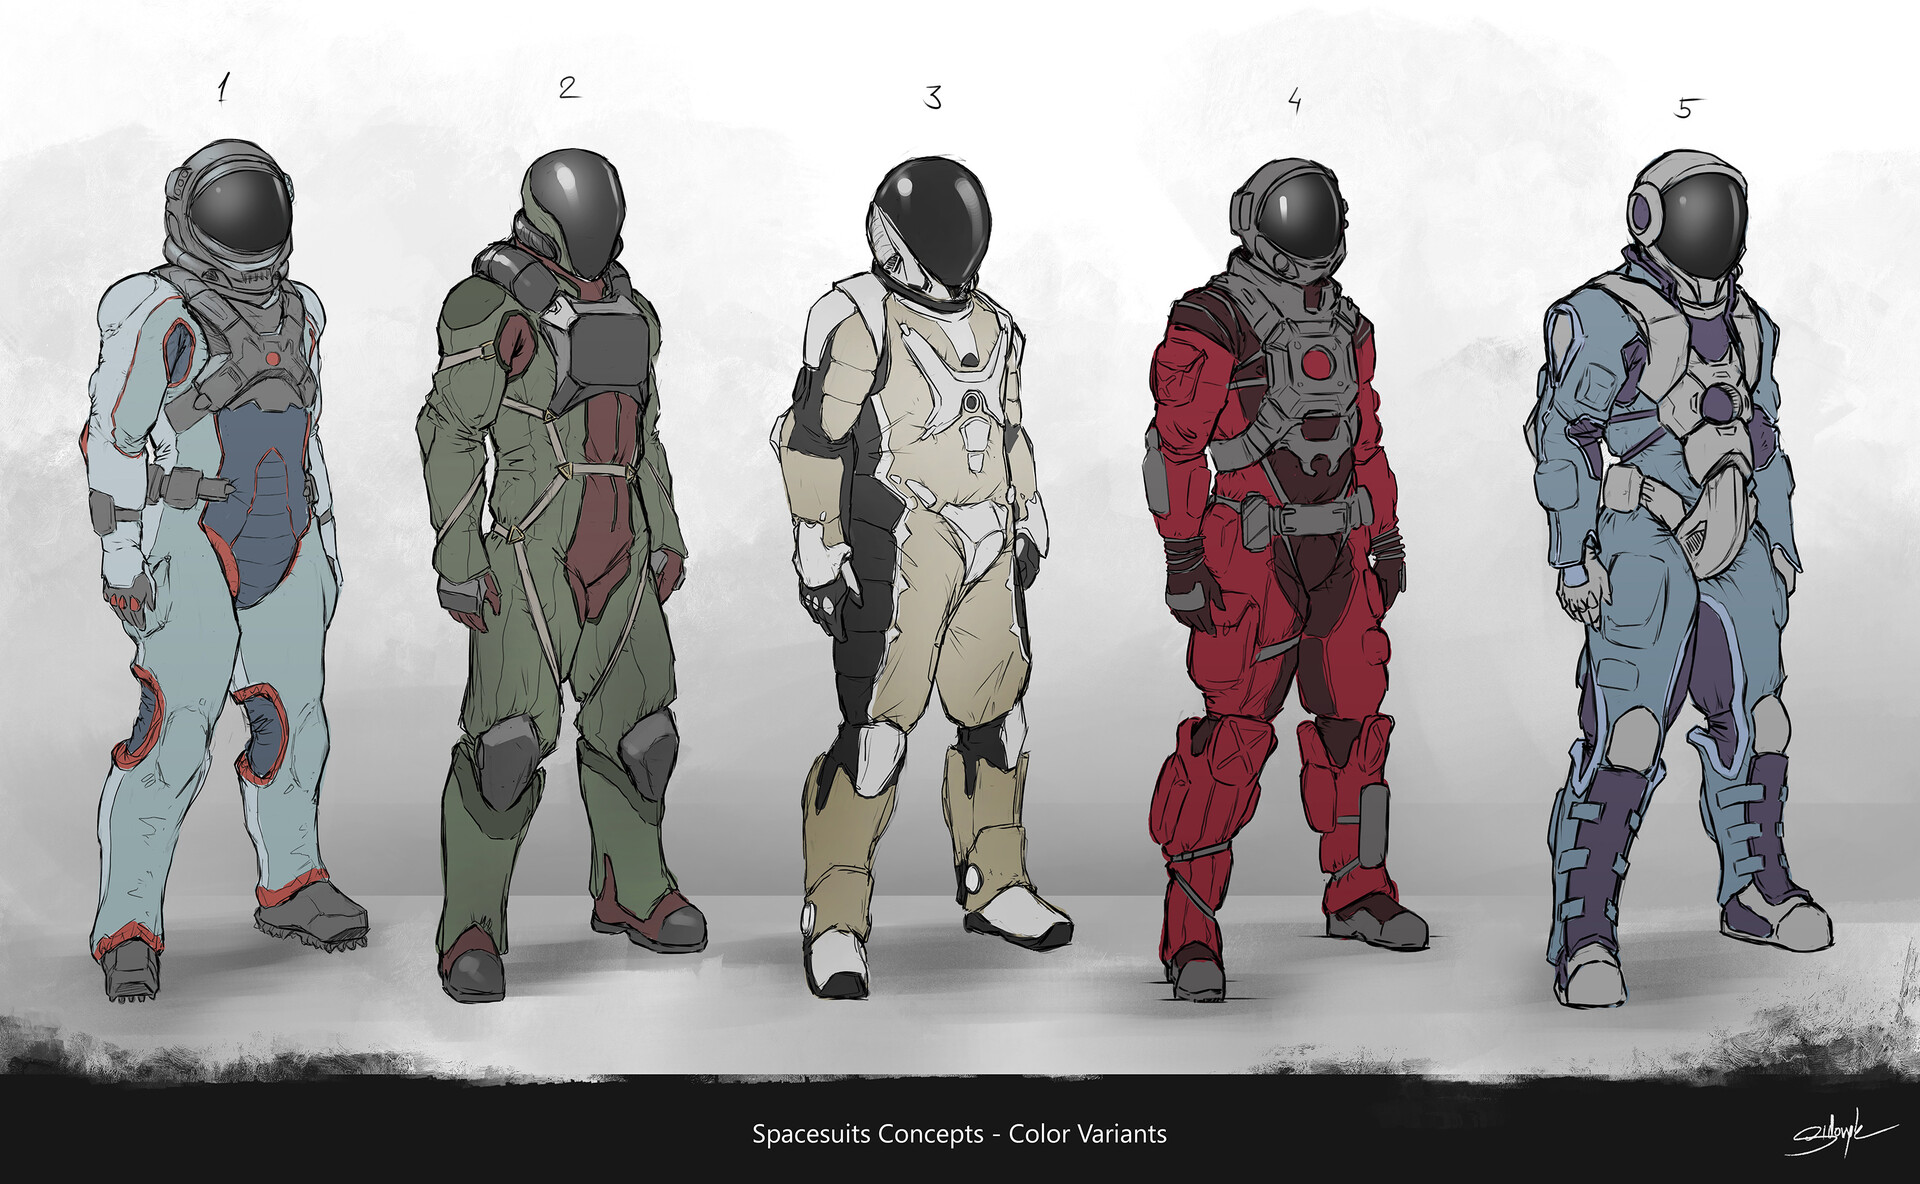 Гига скафандр мод 4. Скафандр инженера. Dead Space Concept Art Suits. Арт медицинский скафандр. Скафандр инженера Чужефанский.